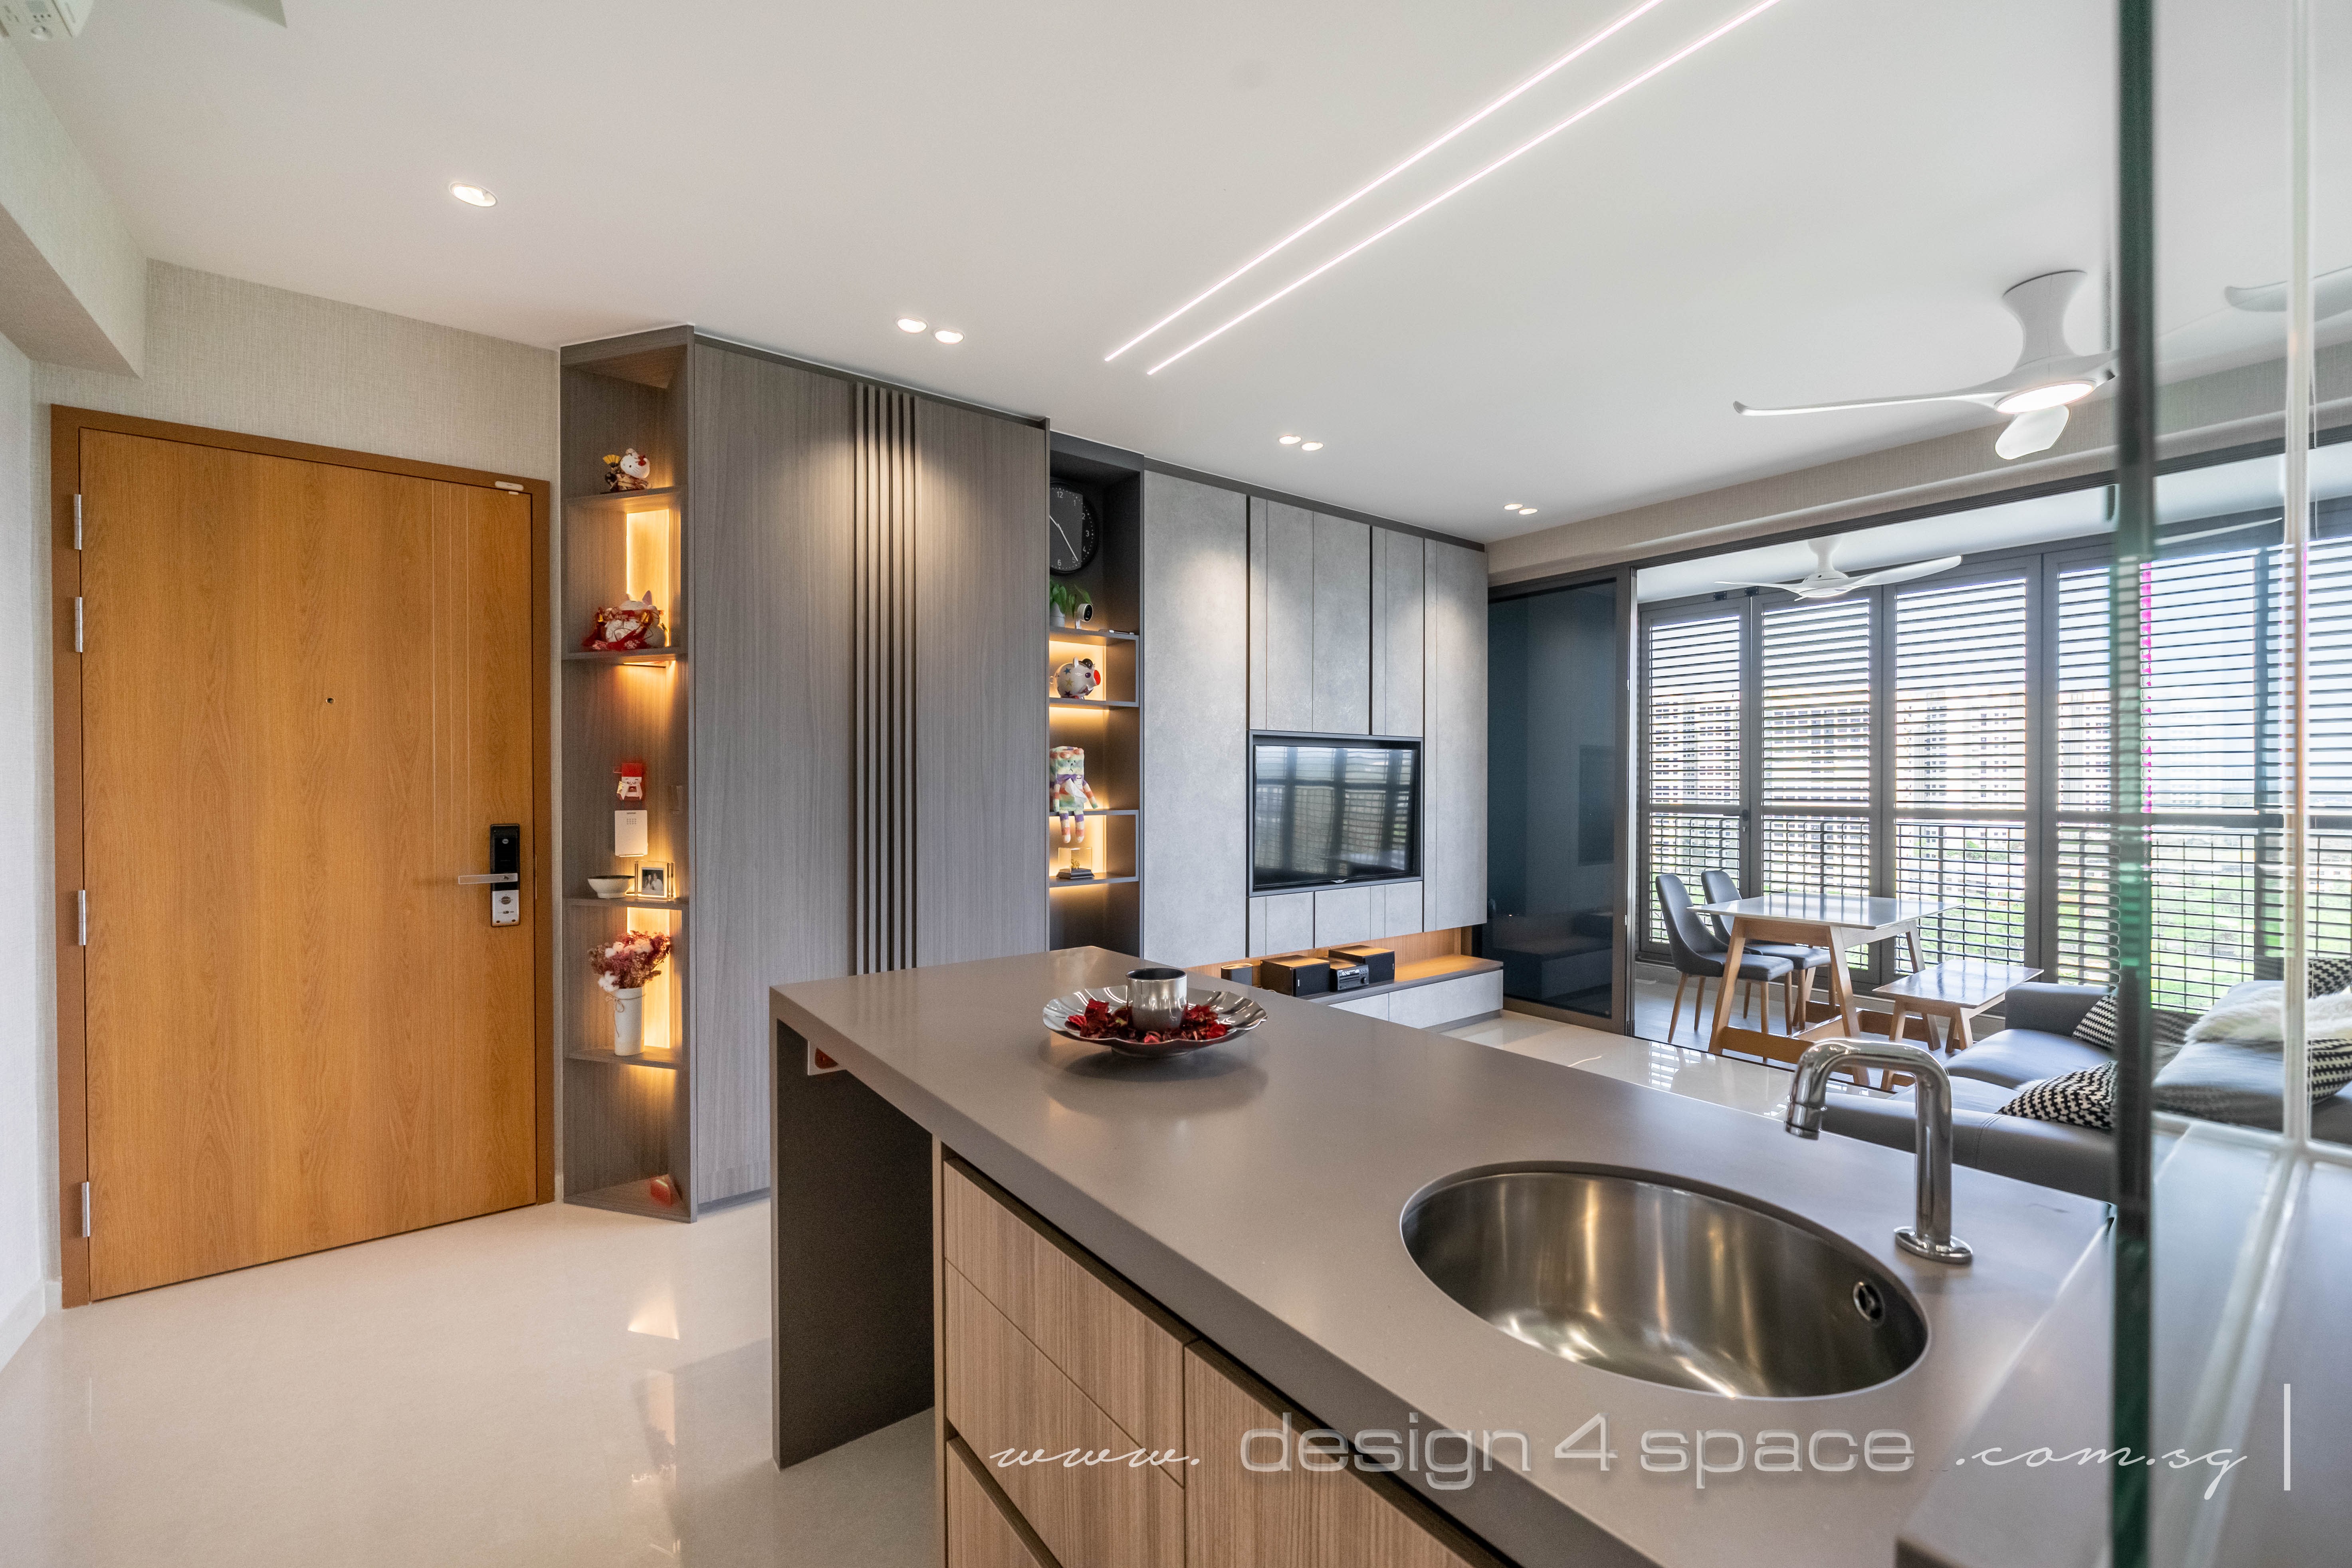  Design - Living Room - HDB Executive Apartment - Design by Design 4 Space Pte Ltd